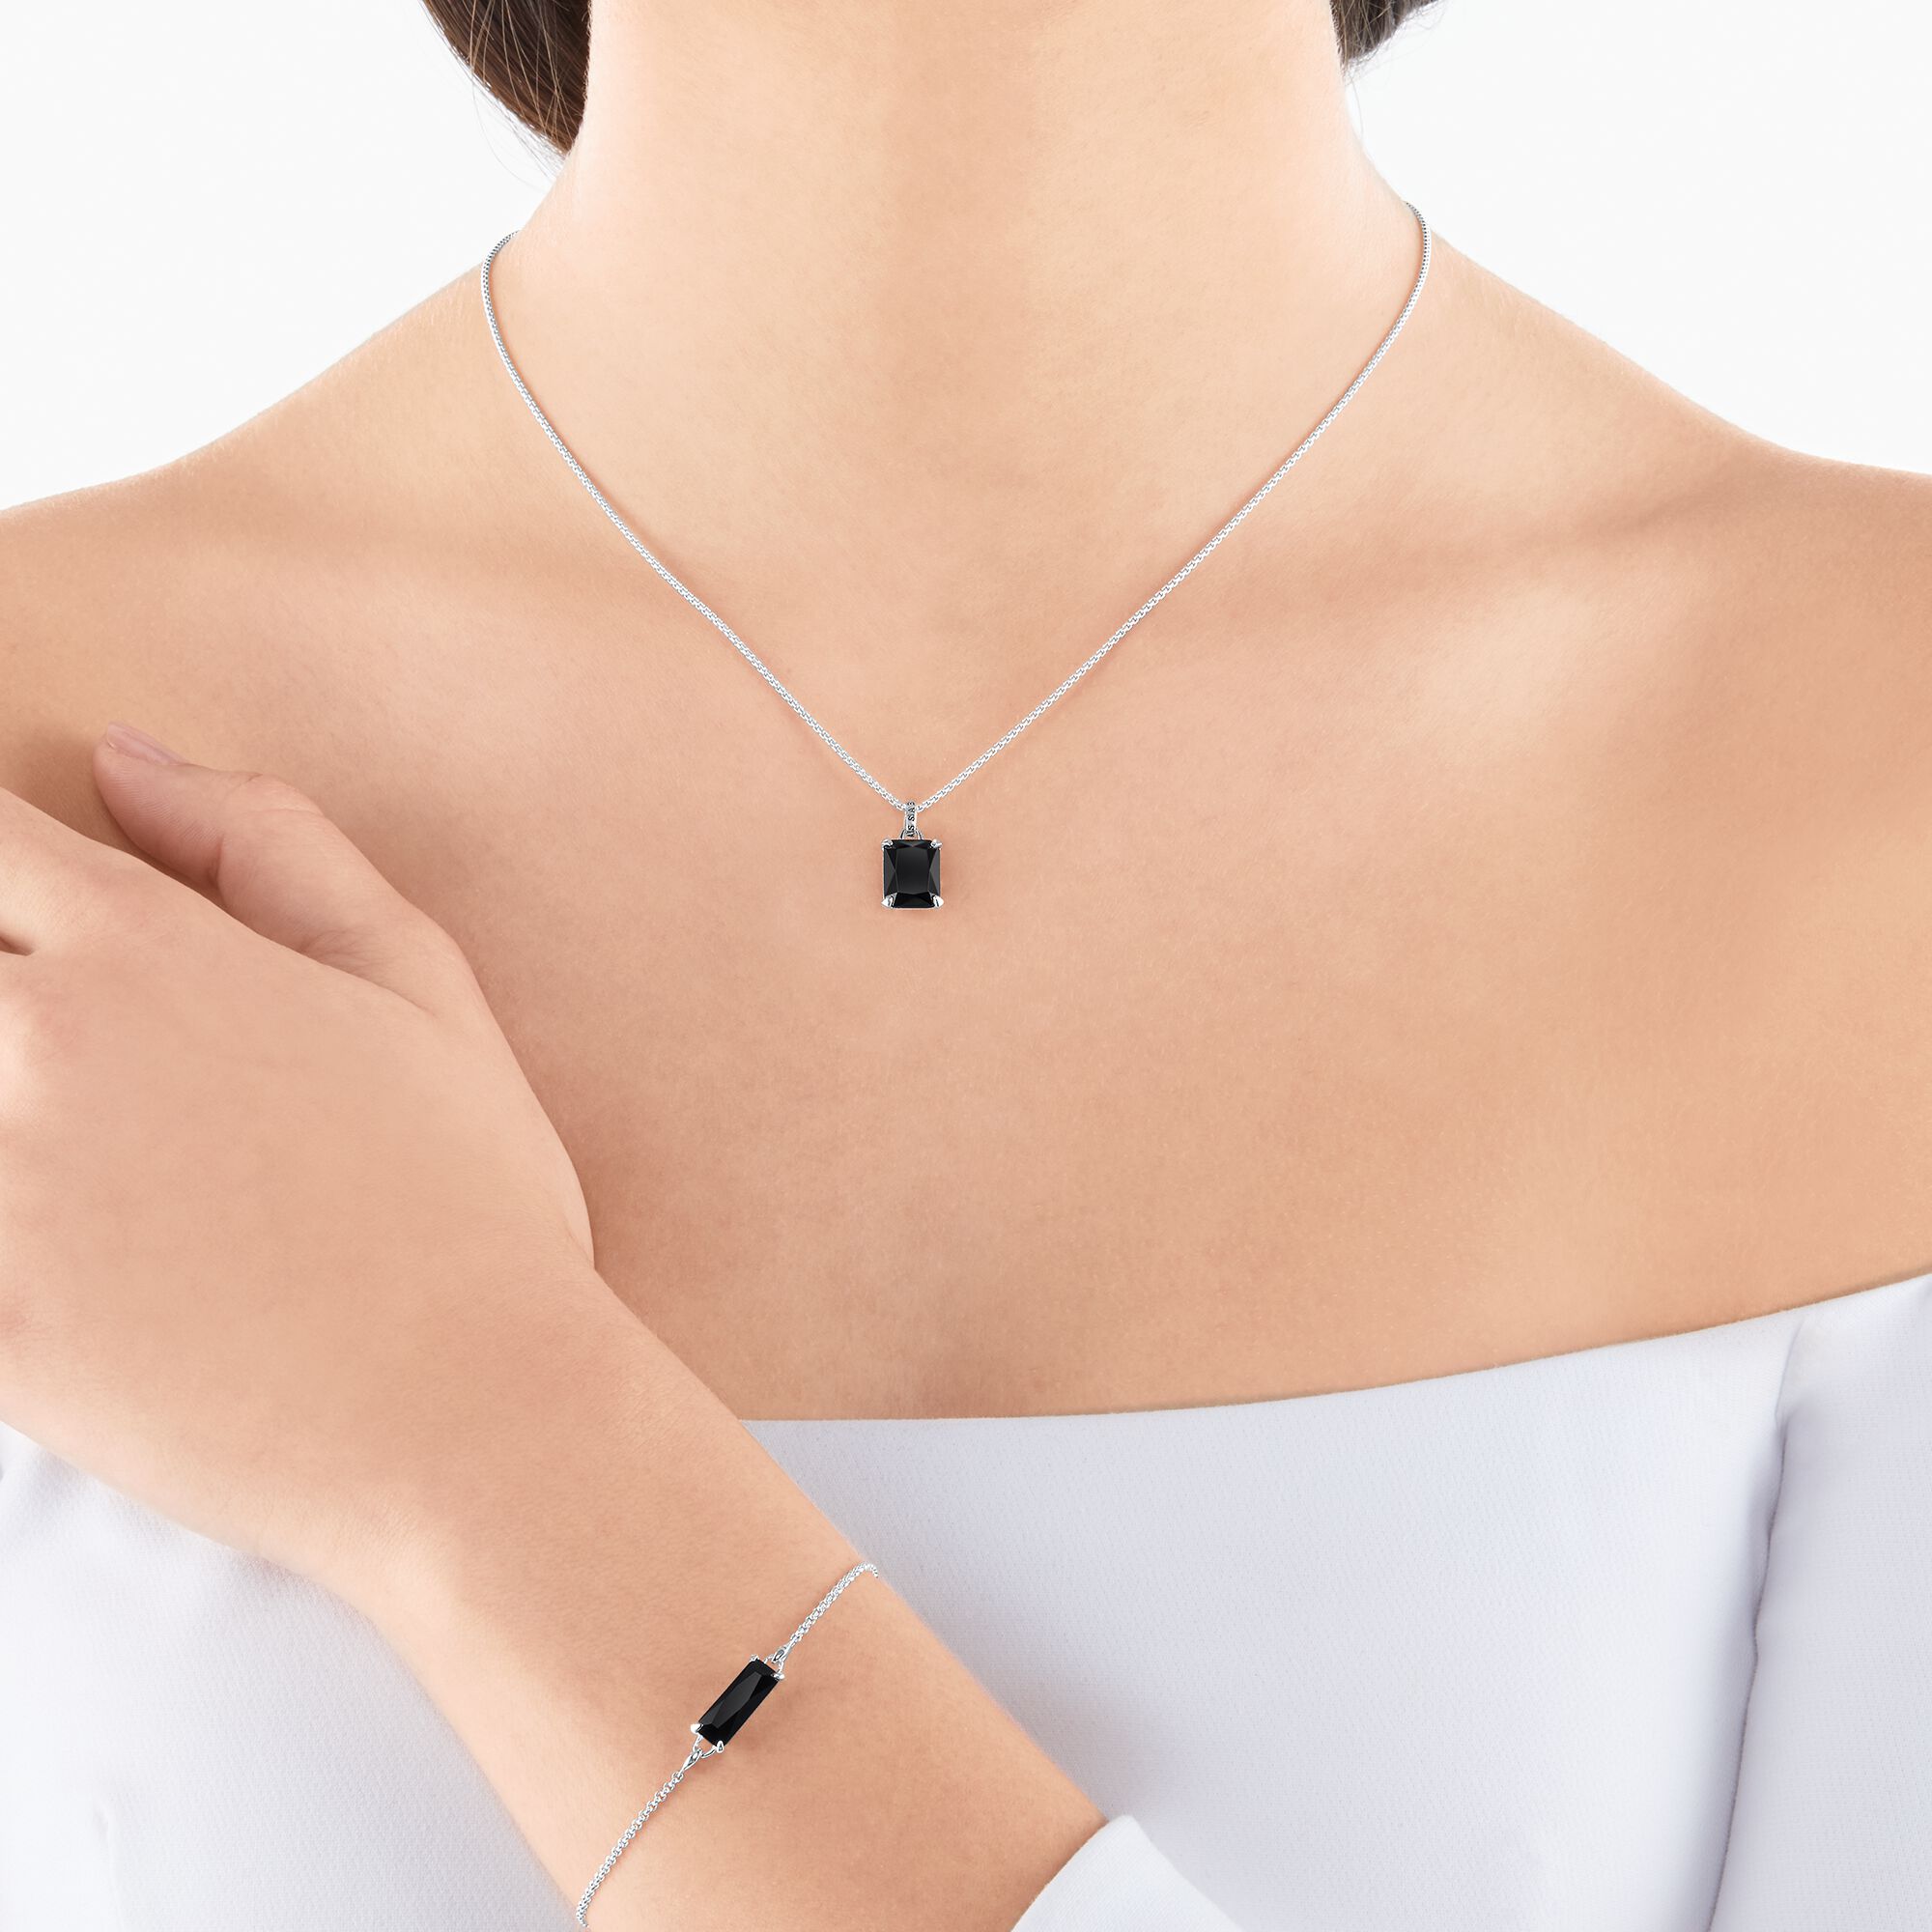 Necklace with deep black onyx pendant | THOMAS SABO